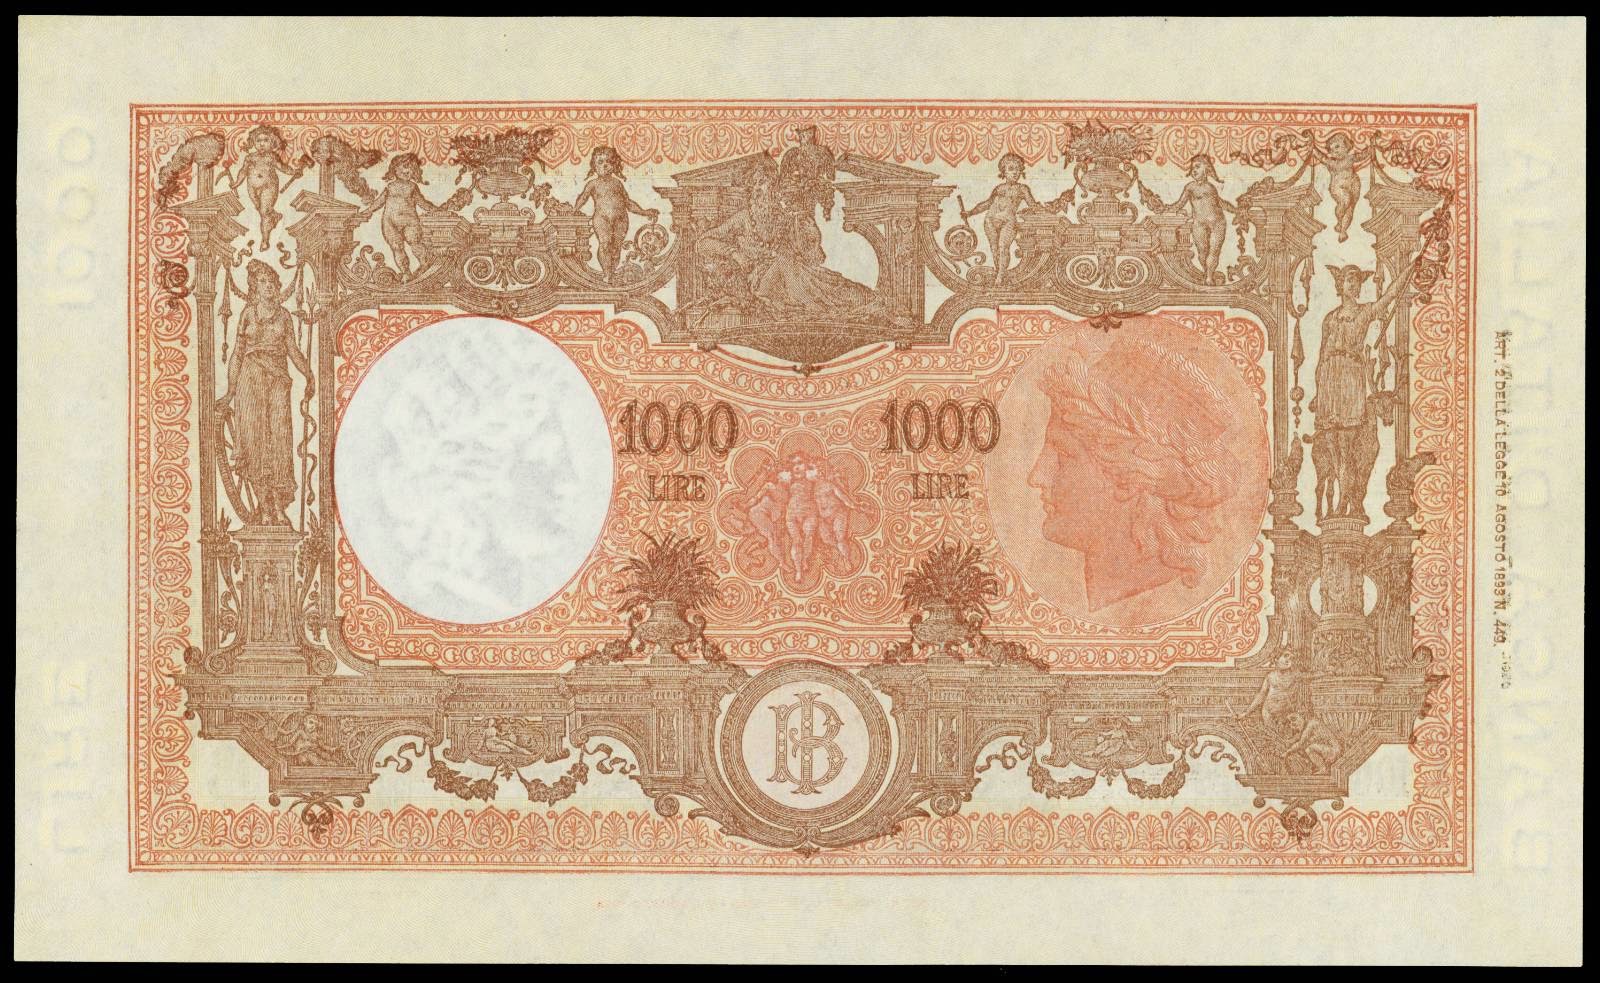 100 Italian Lira banknote